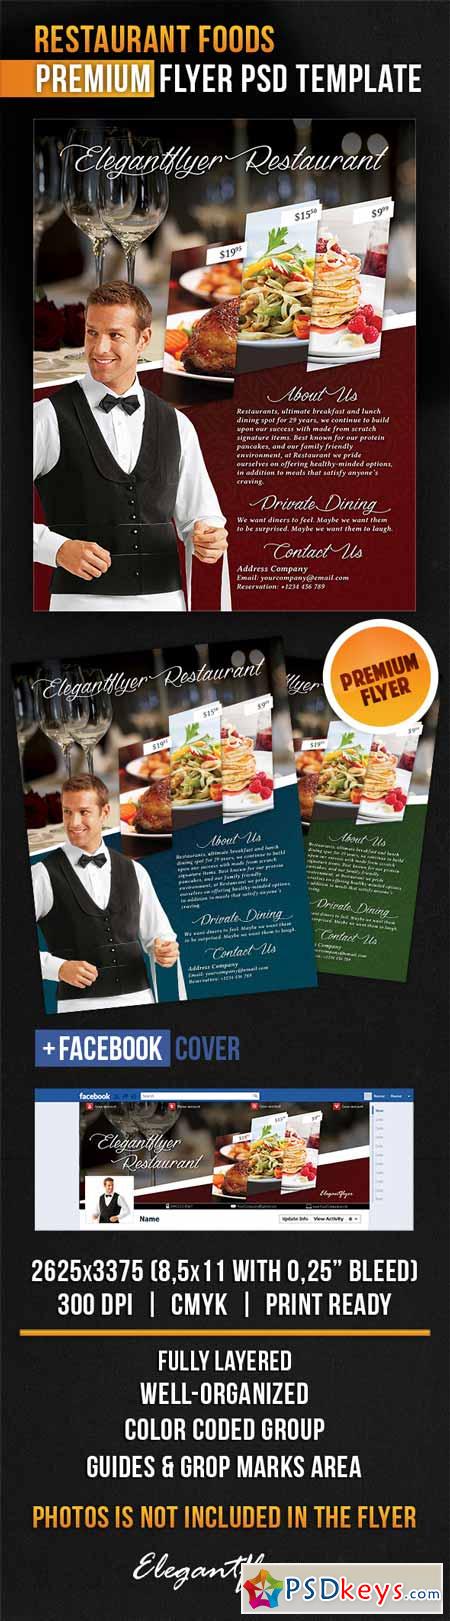 Restaurant Foods  Flyer PSD Template + Facebook Cover